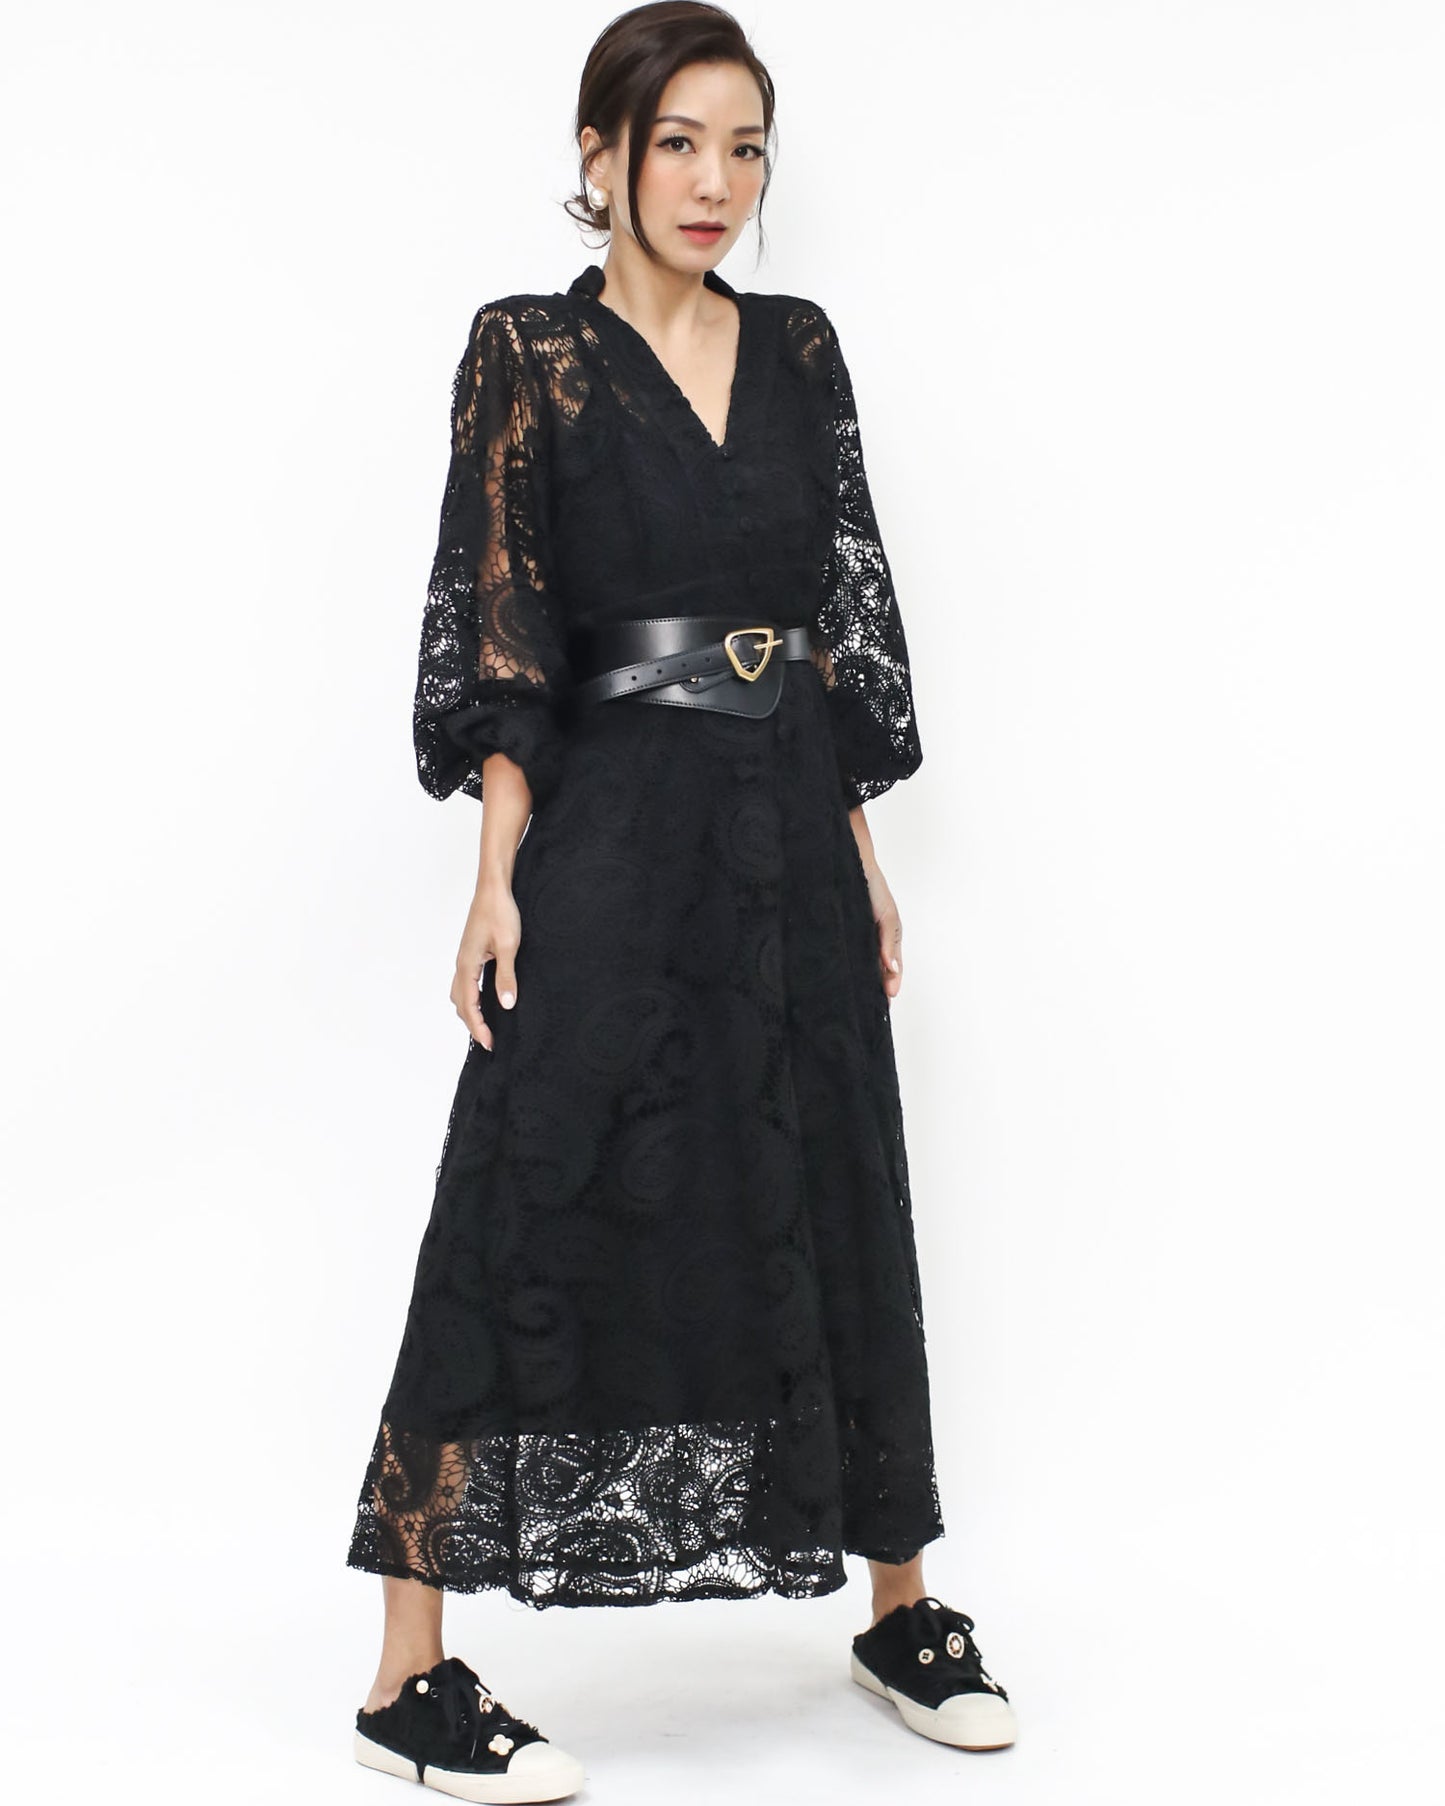 black crochet lace longline dress with rope belt *pre-order*